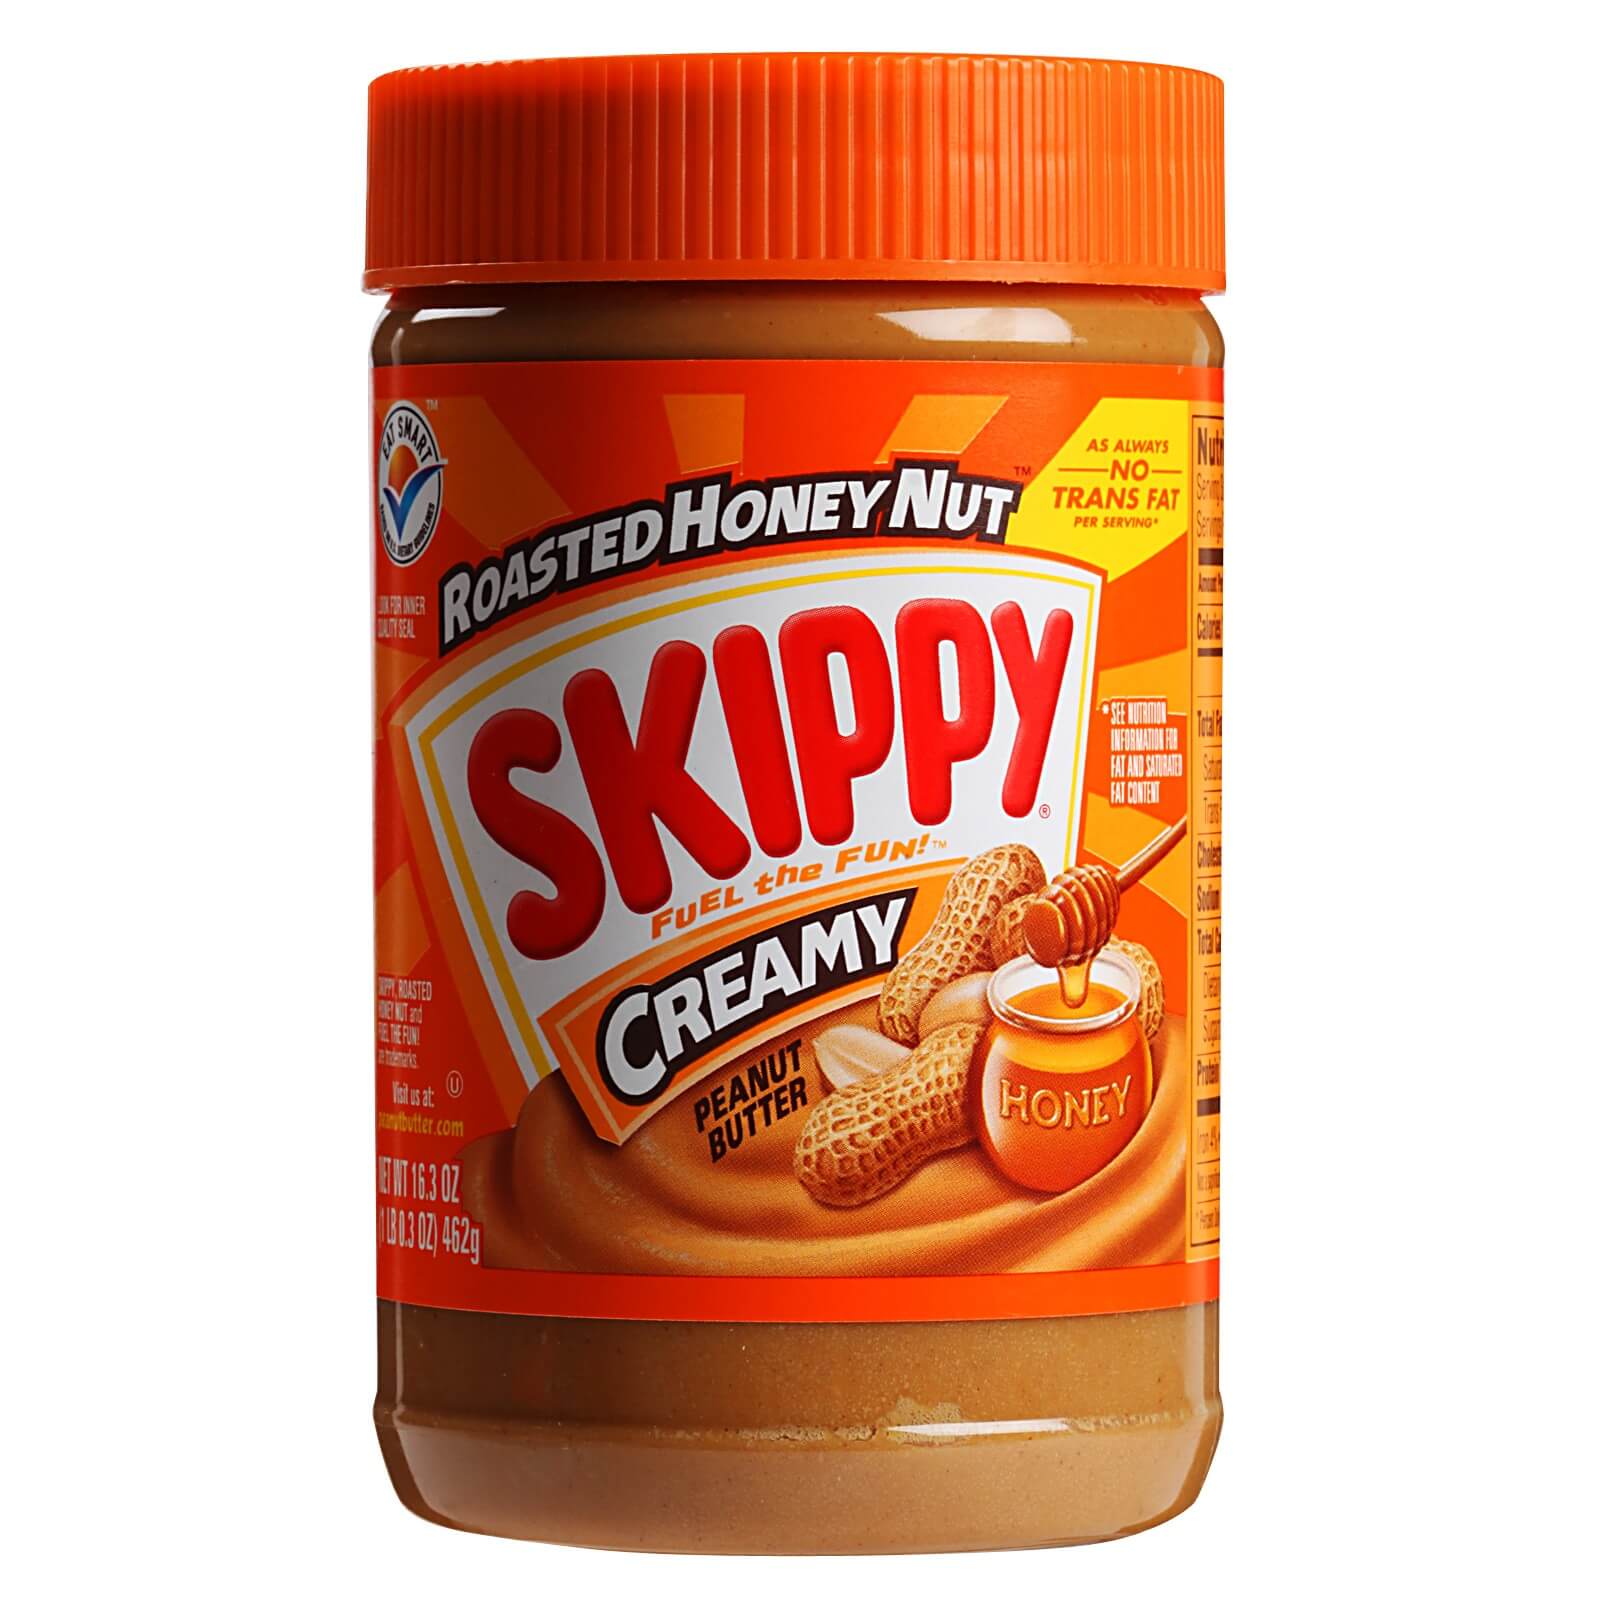 Skippy Roasted Honey Nut Creamy Peanut Butter 462g